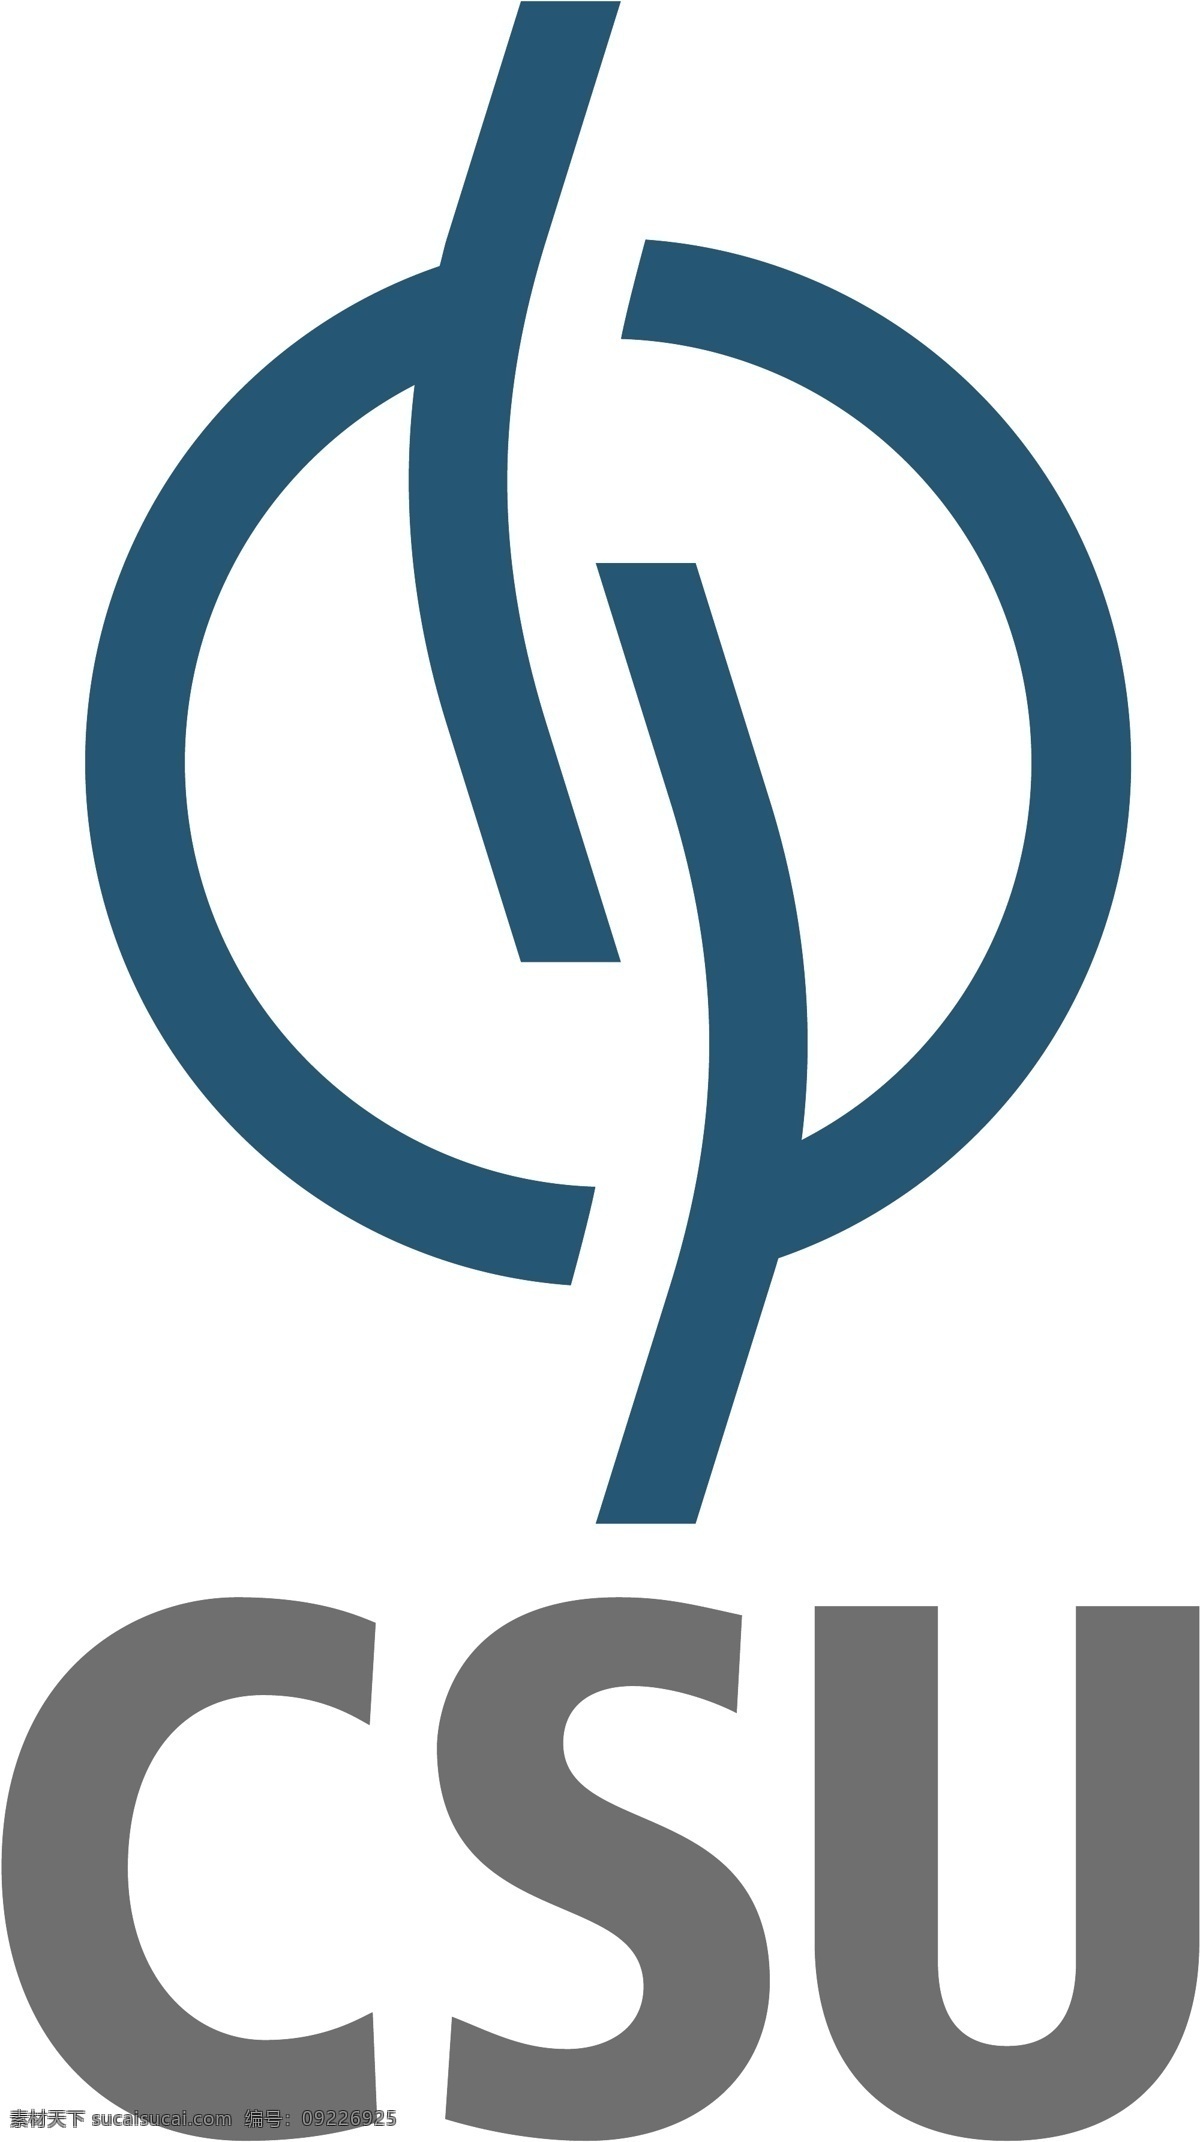 csu 一卡通 系统 标识 公司 免费 品牌 品牌标识 商标 矢量标志下载 免费矢量标识 矢量 psd源文件 logo设计